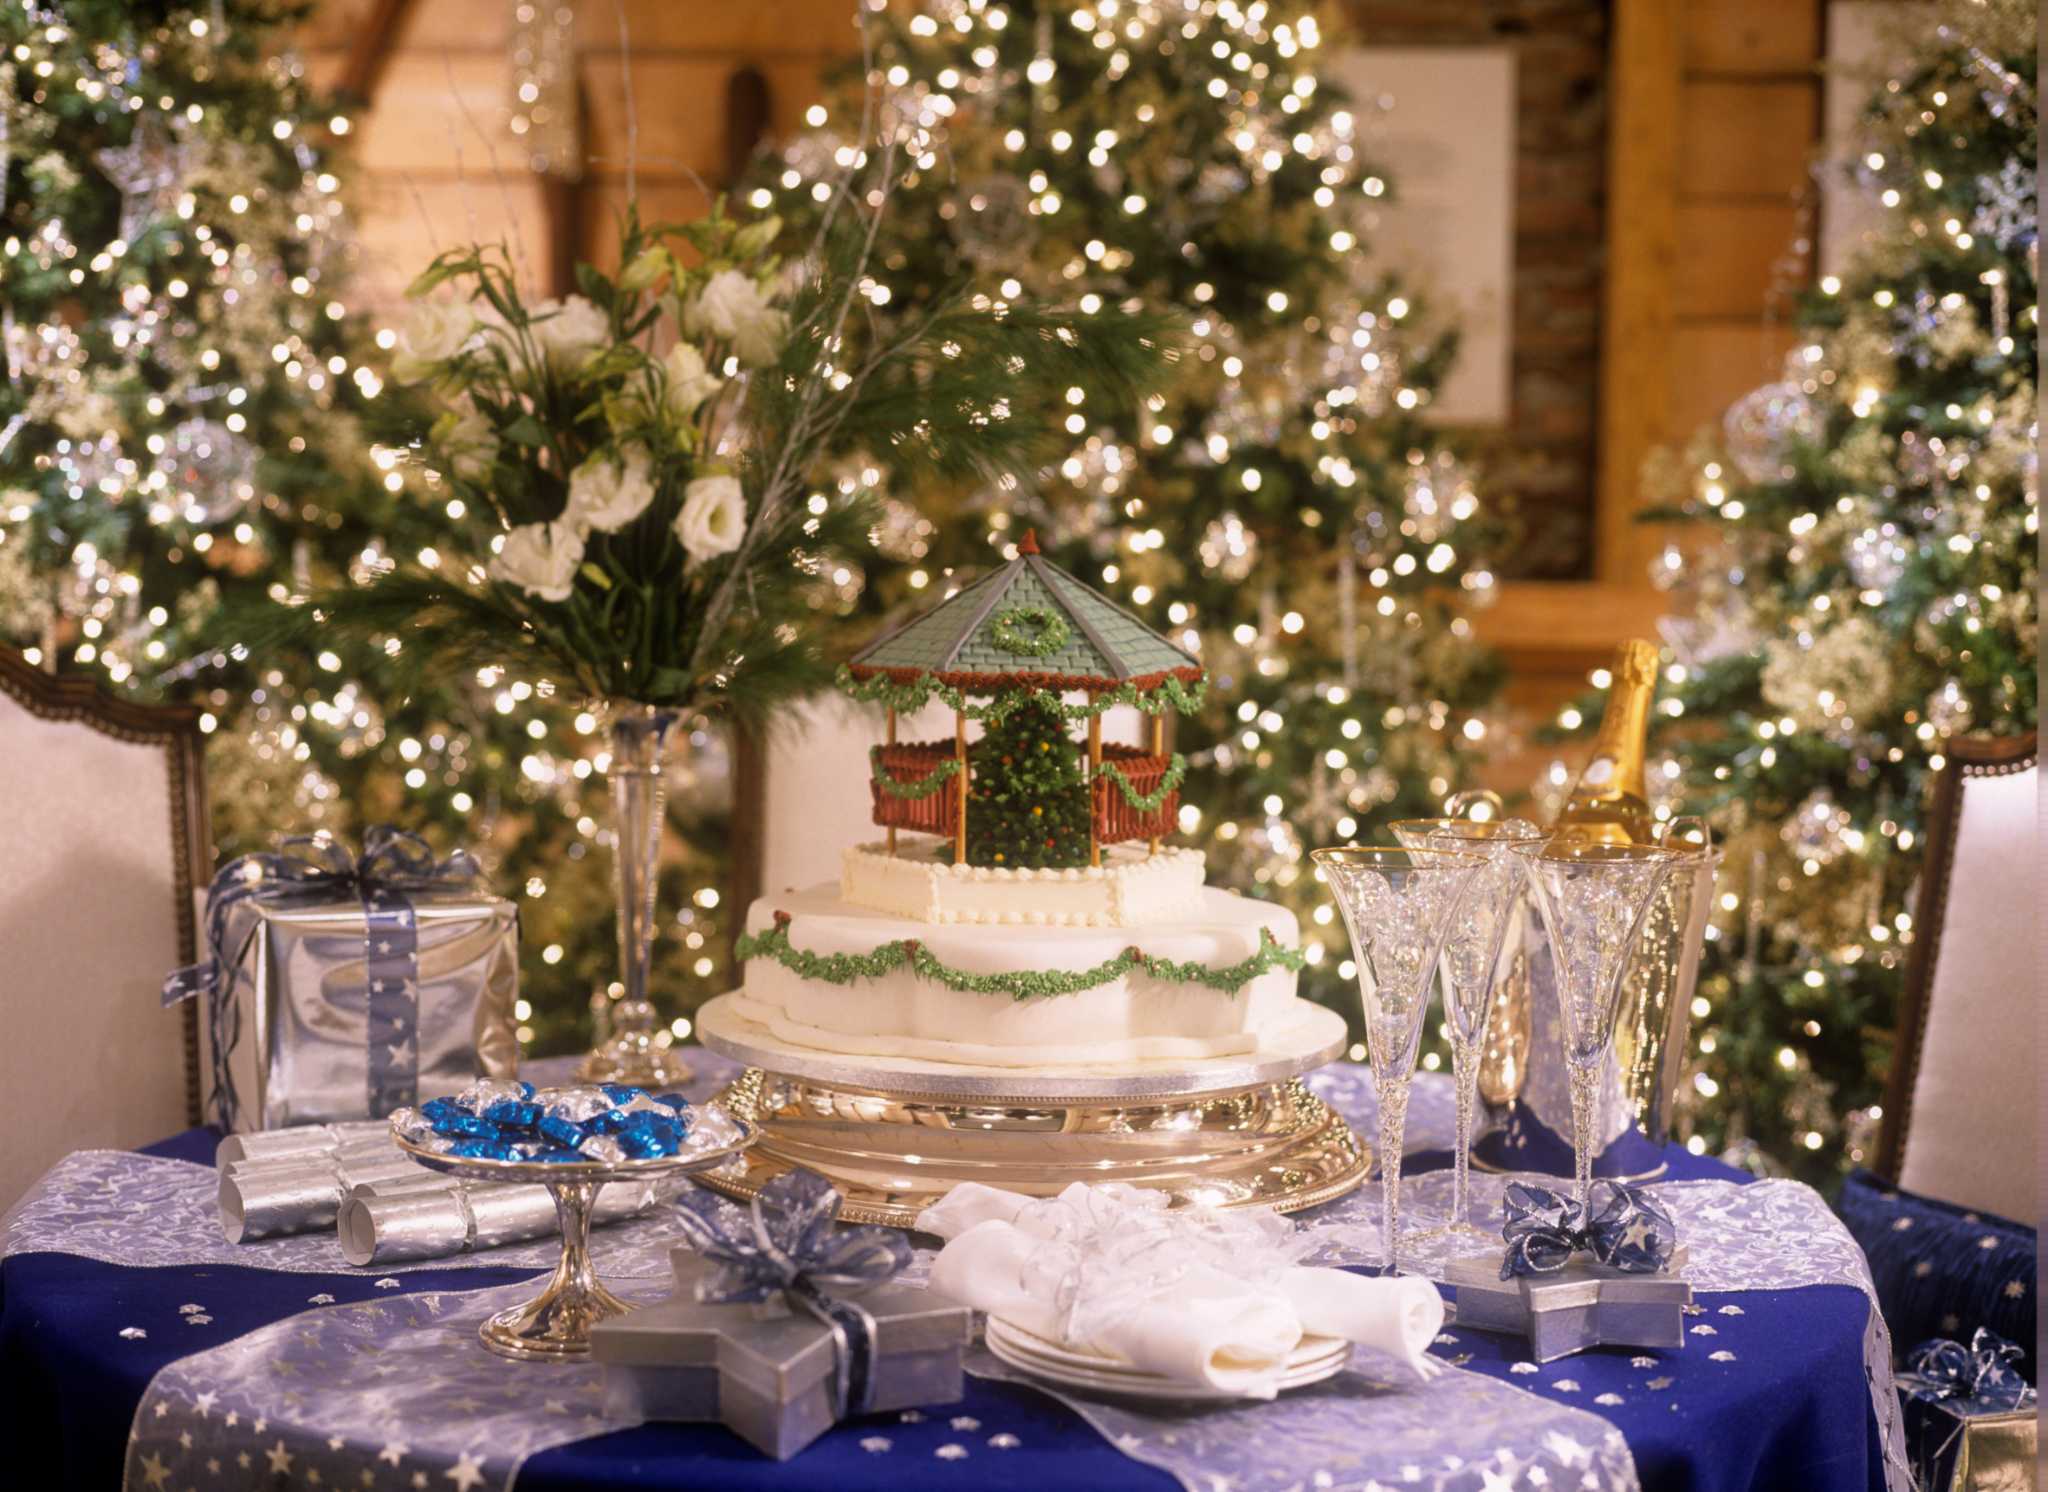 interfaith-families-can-create-holiday-fusion-with-hanukkah-and-christmas-decor